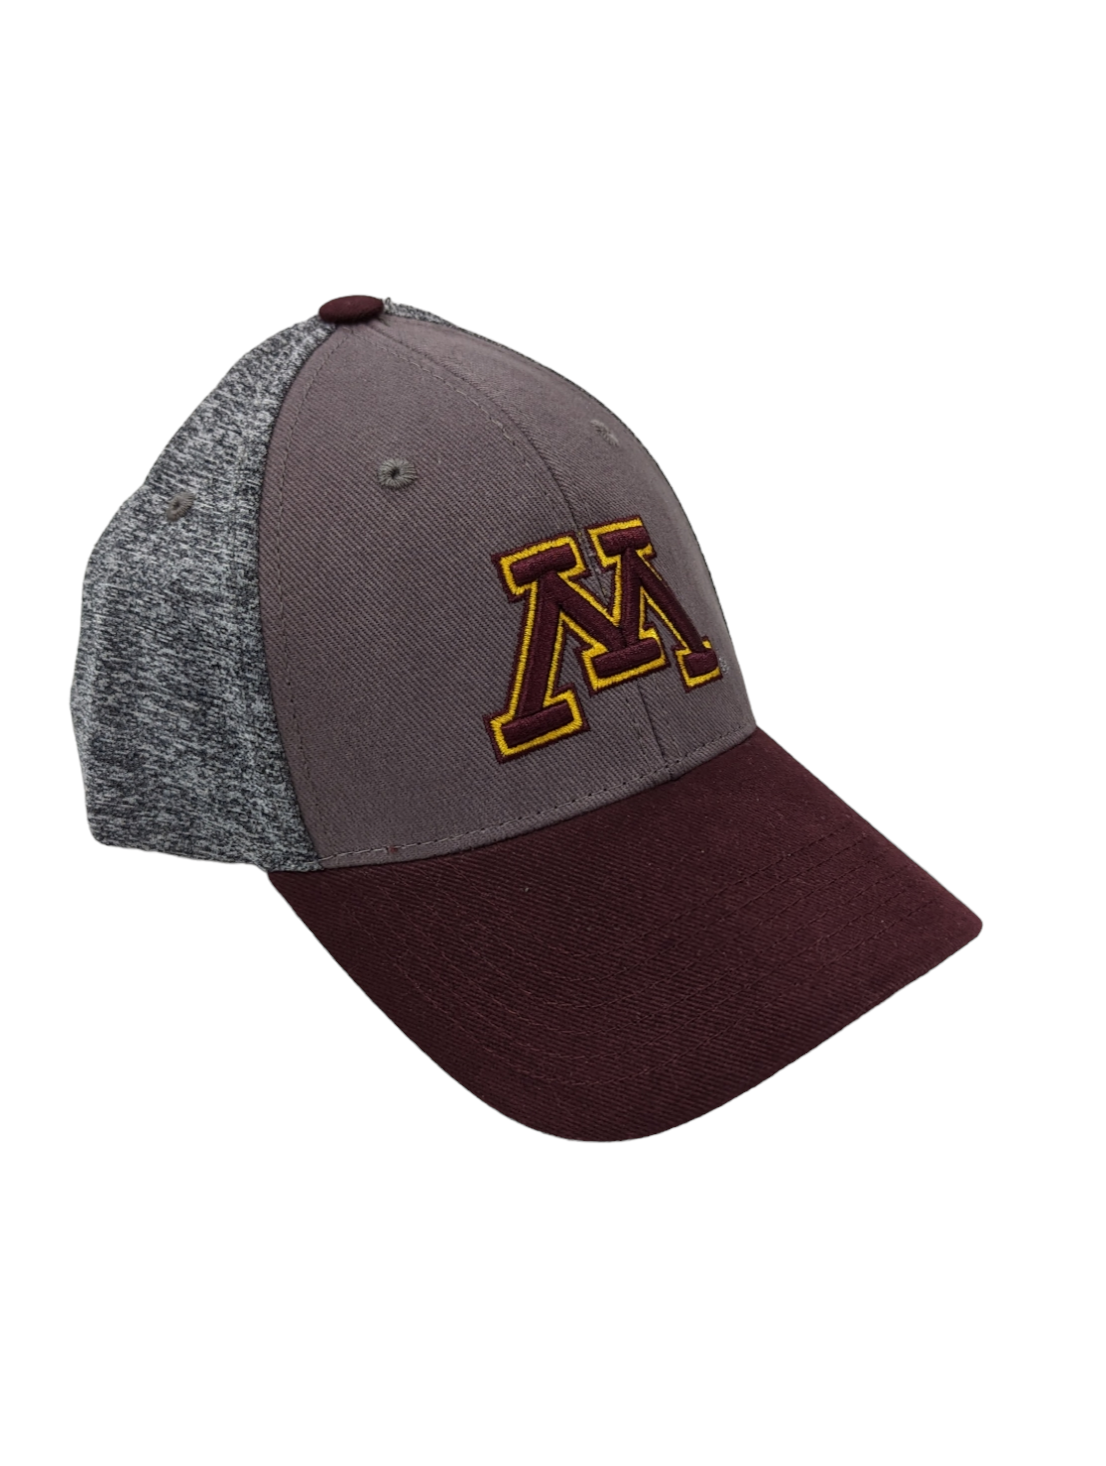 Men's Minnesota Golden Gophers Top of the World Captivating Adjustable Hat